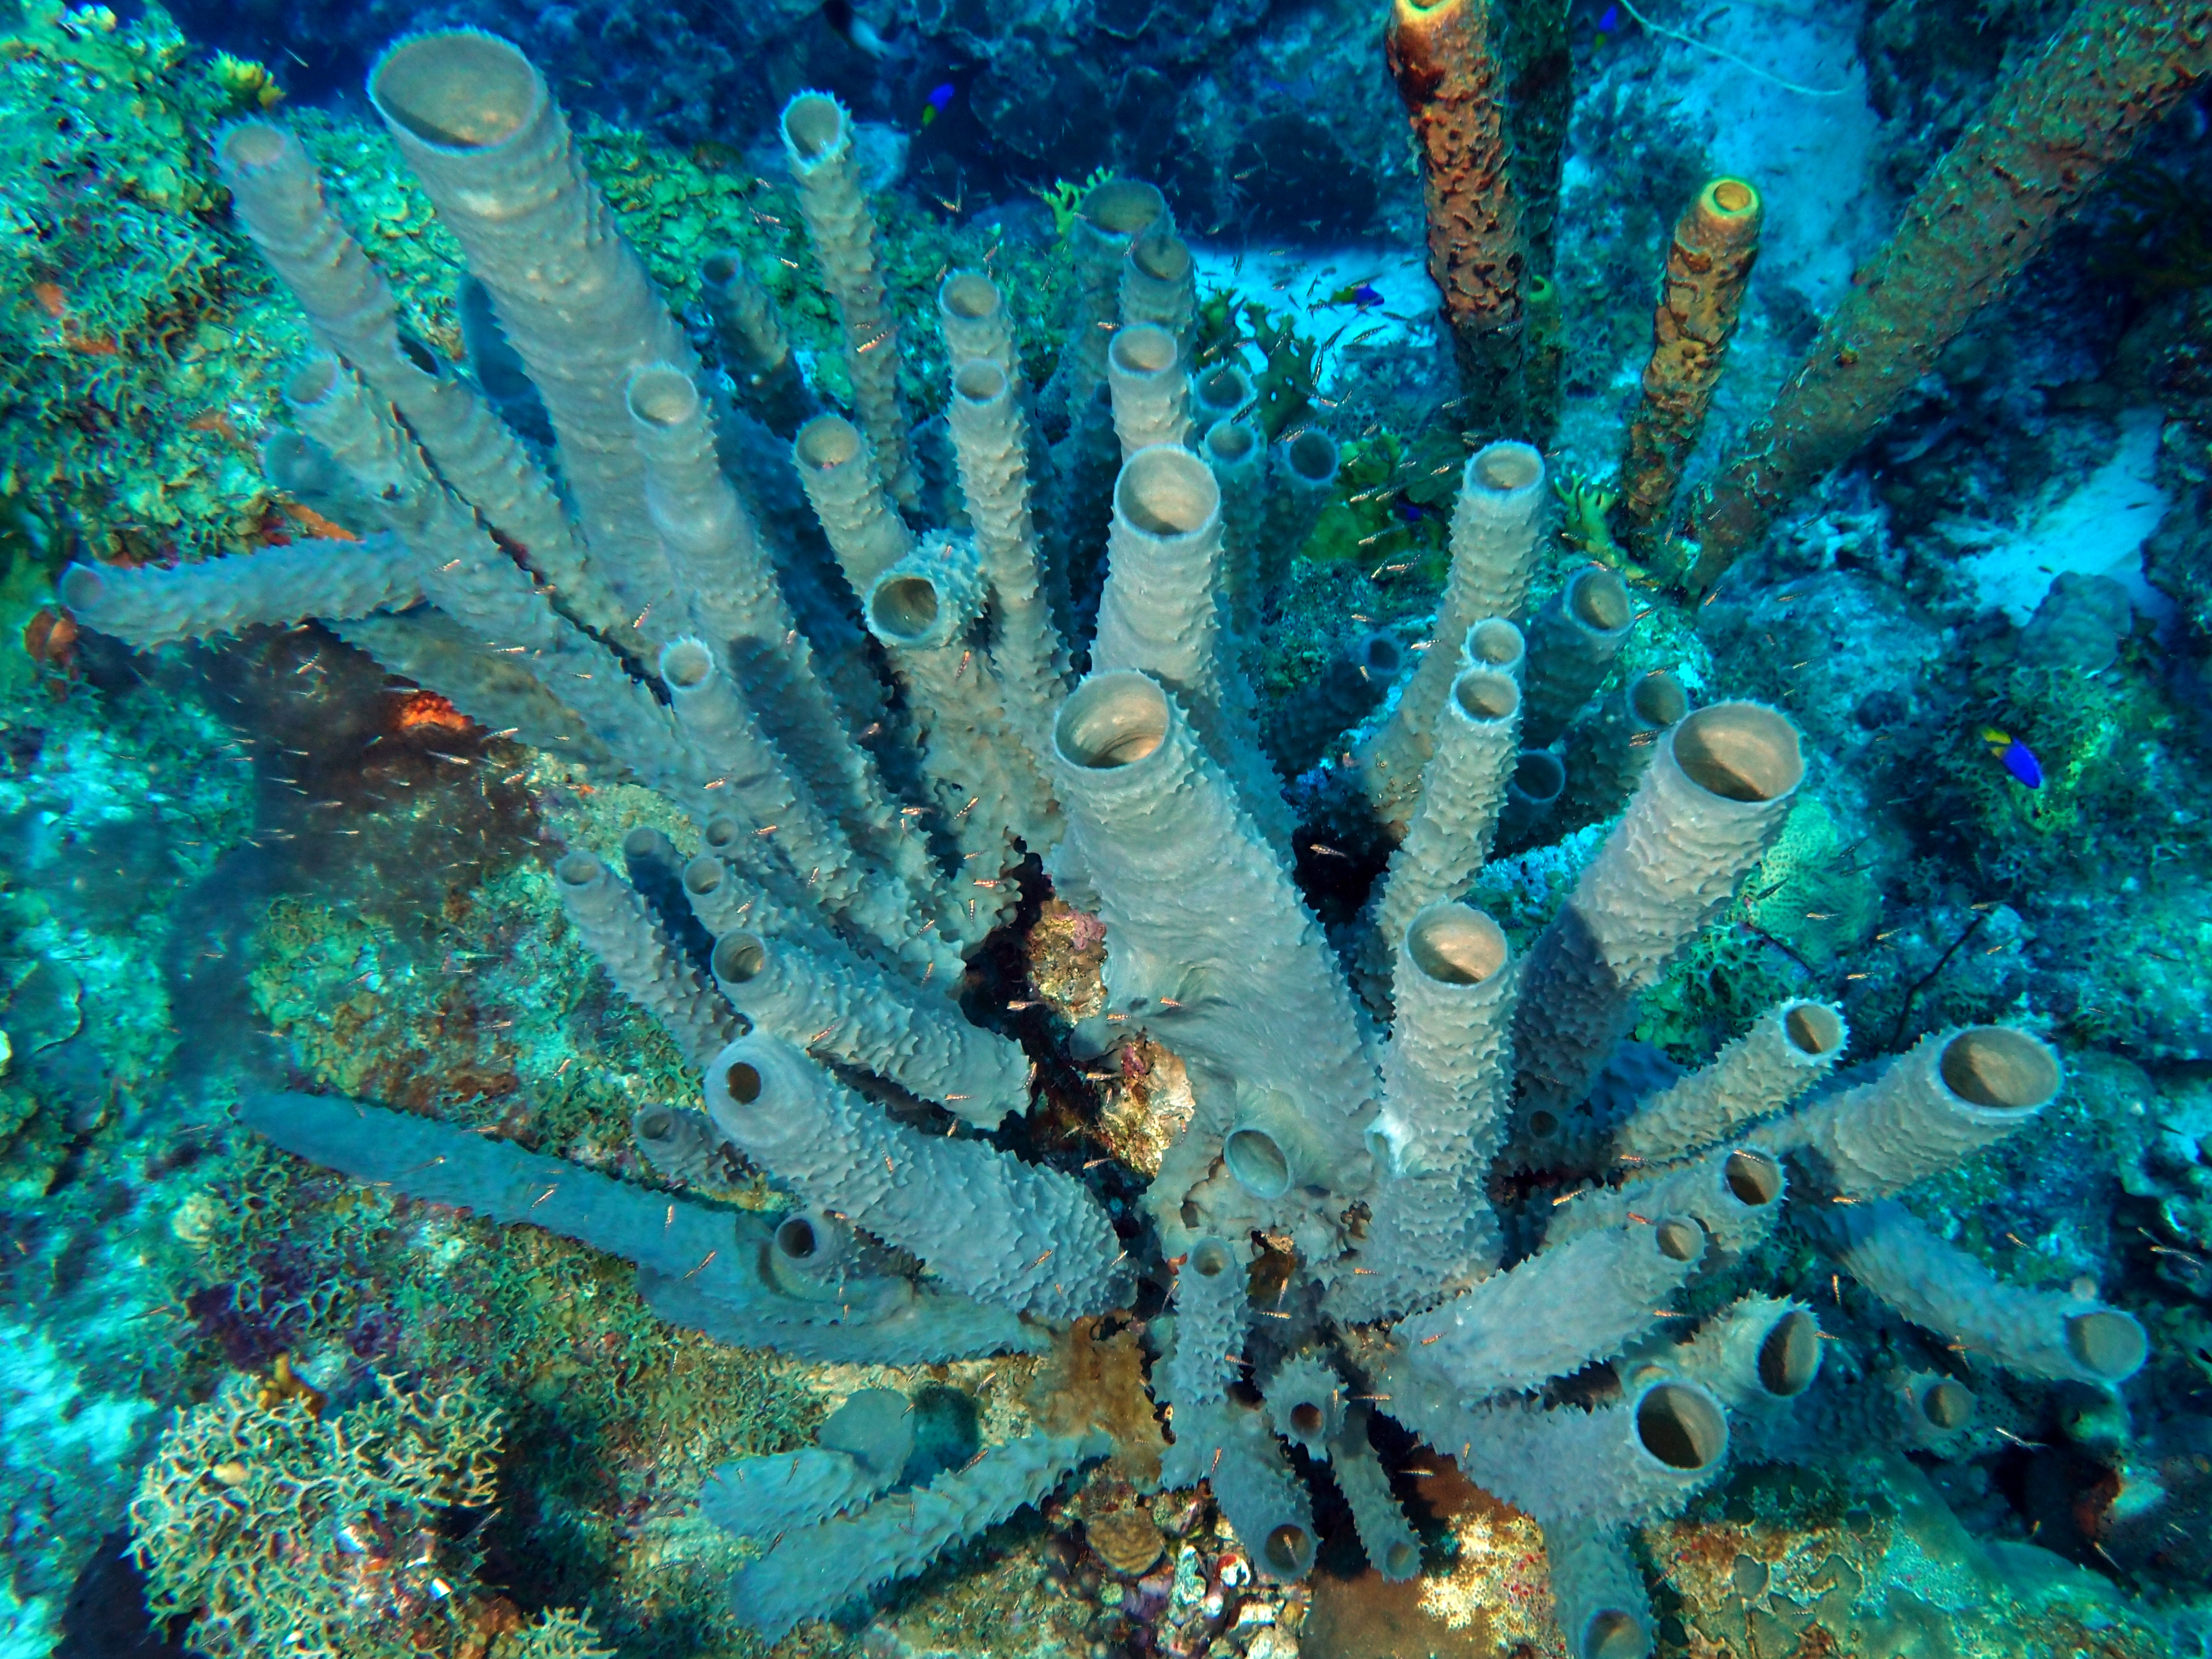 Branching Vase Sponge - Callyspongia aculeata